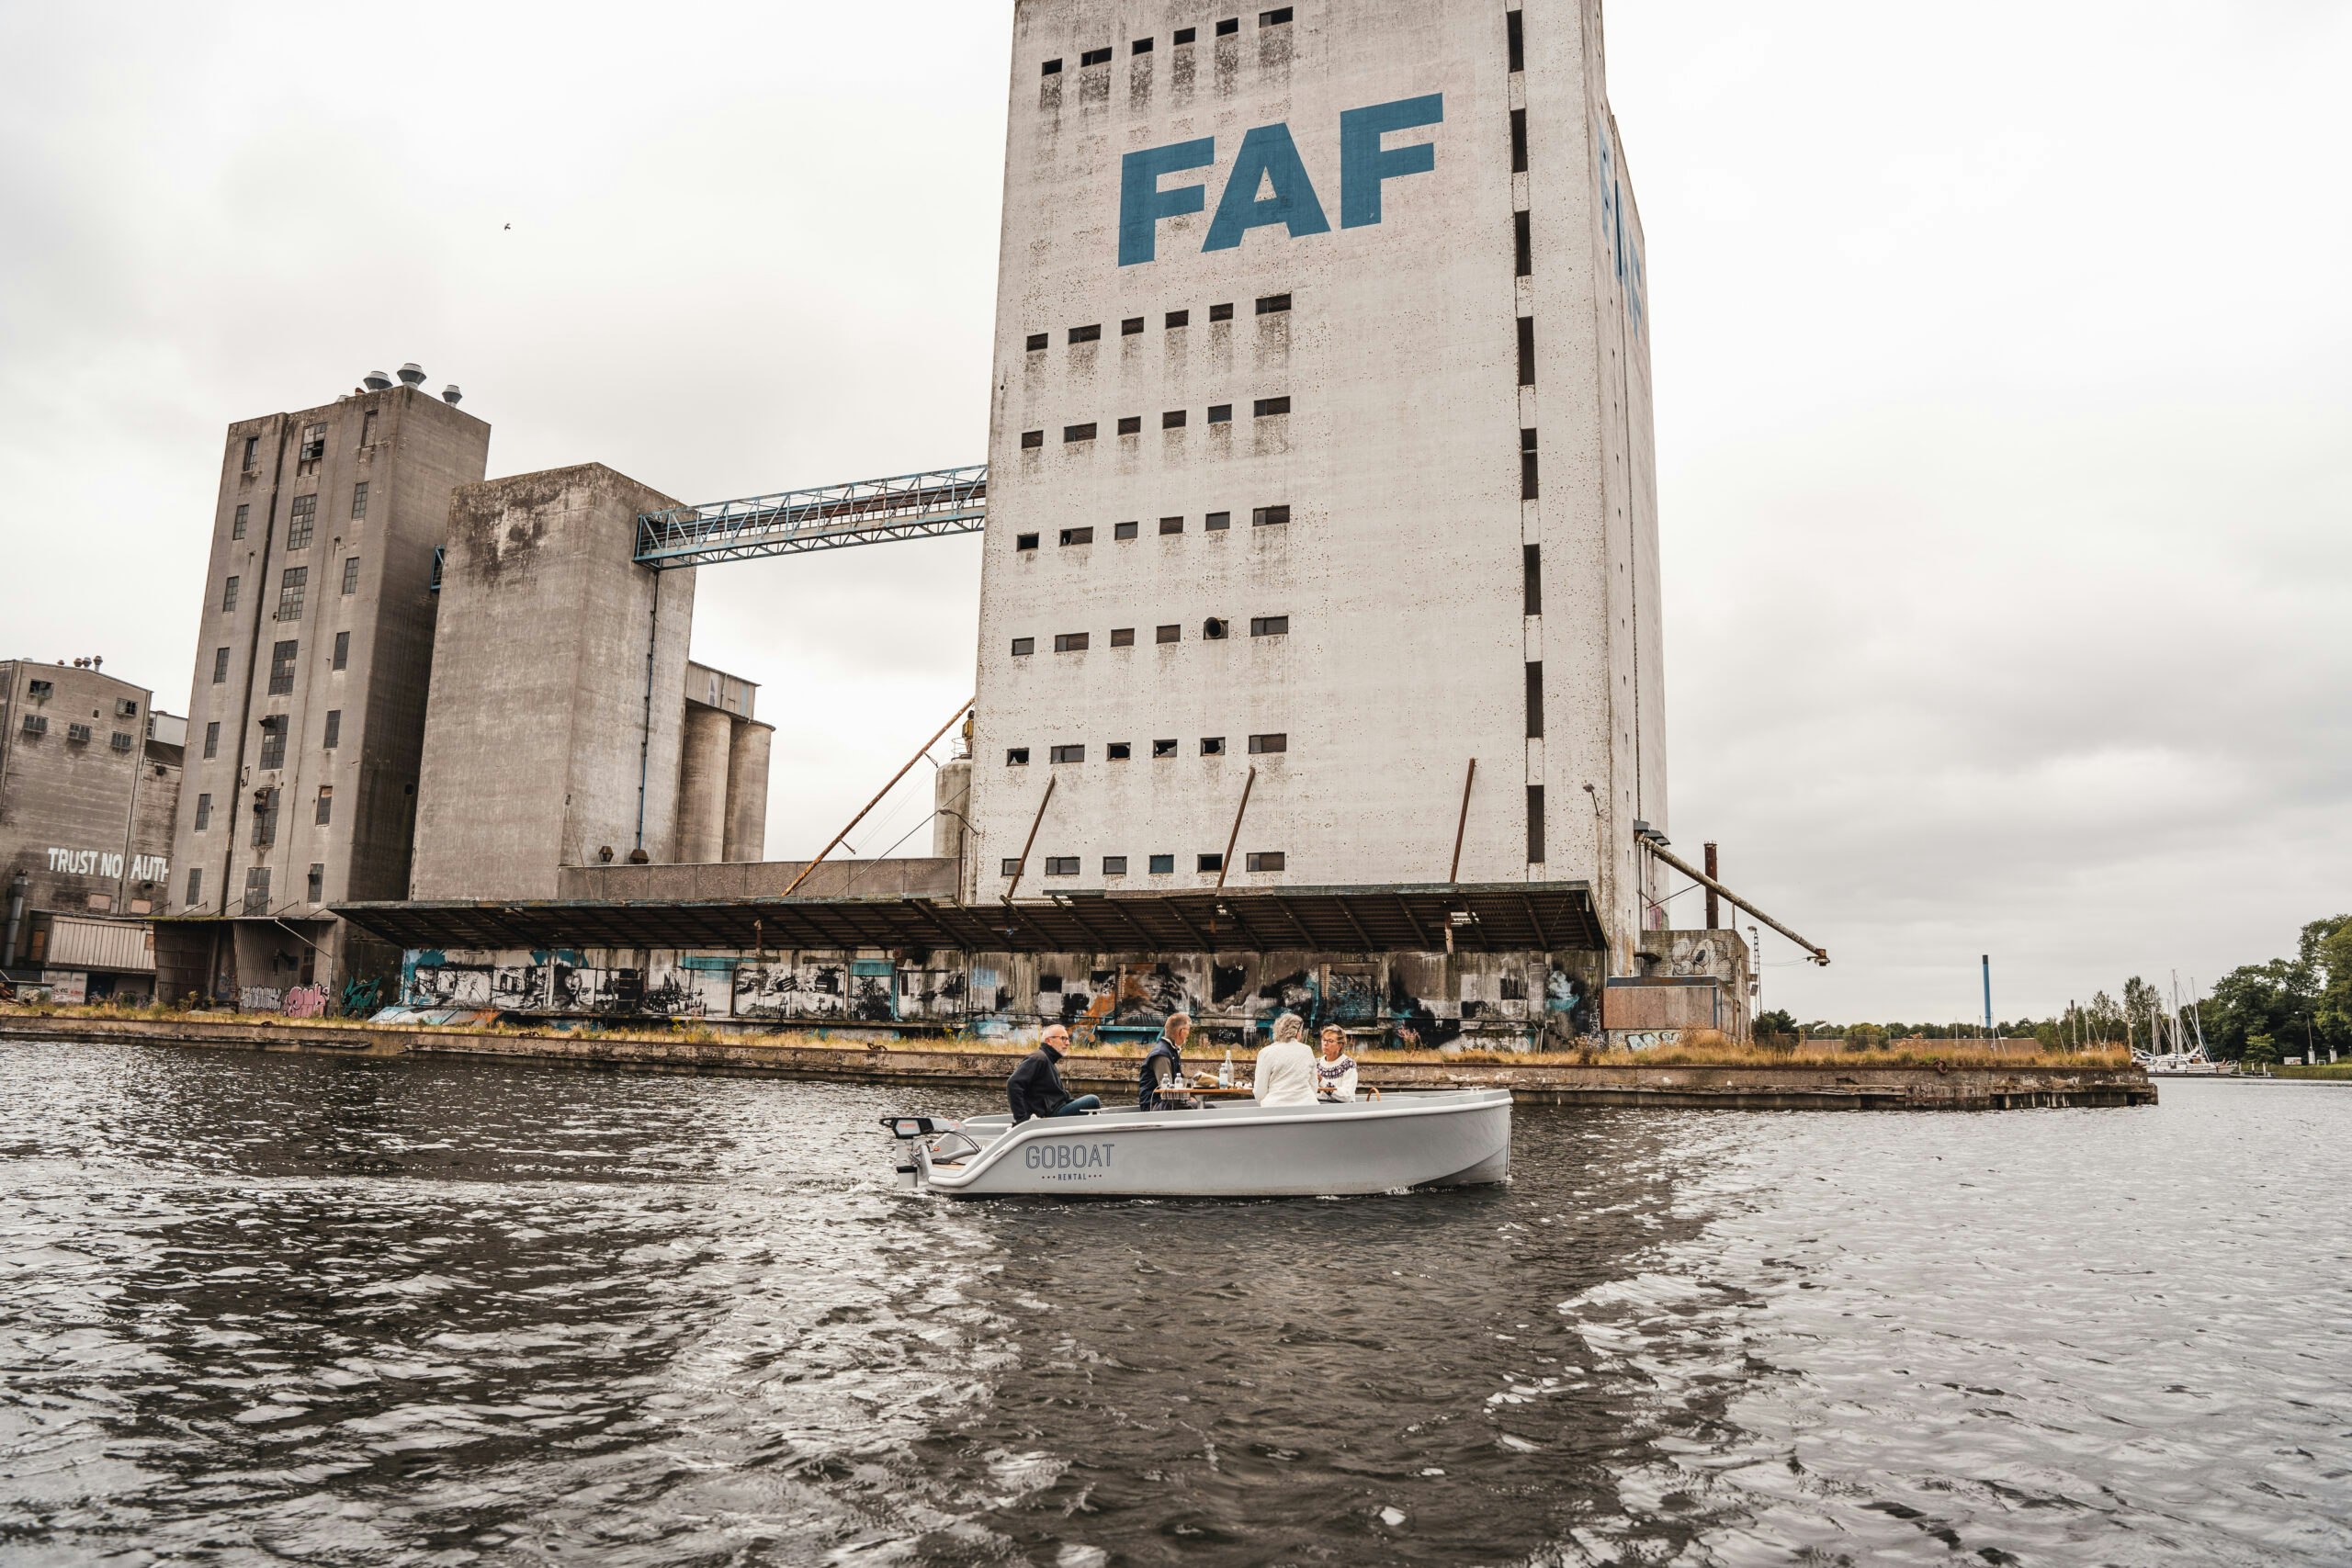 GoBoat Odense FAF building in Odense harbor